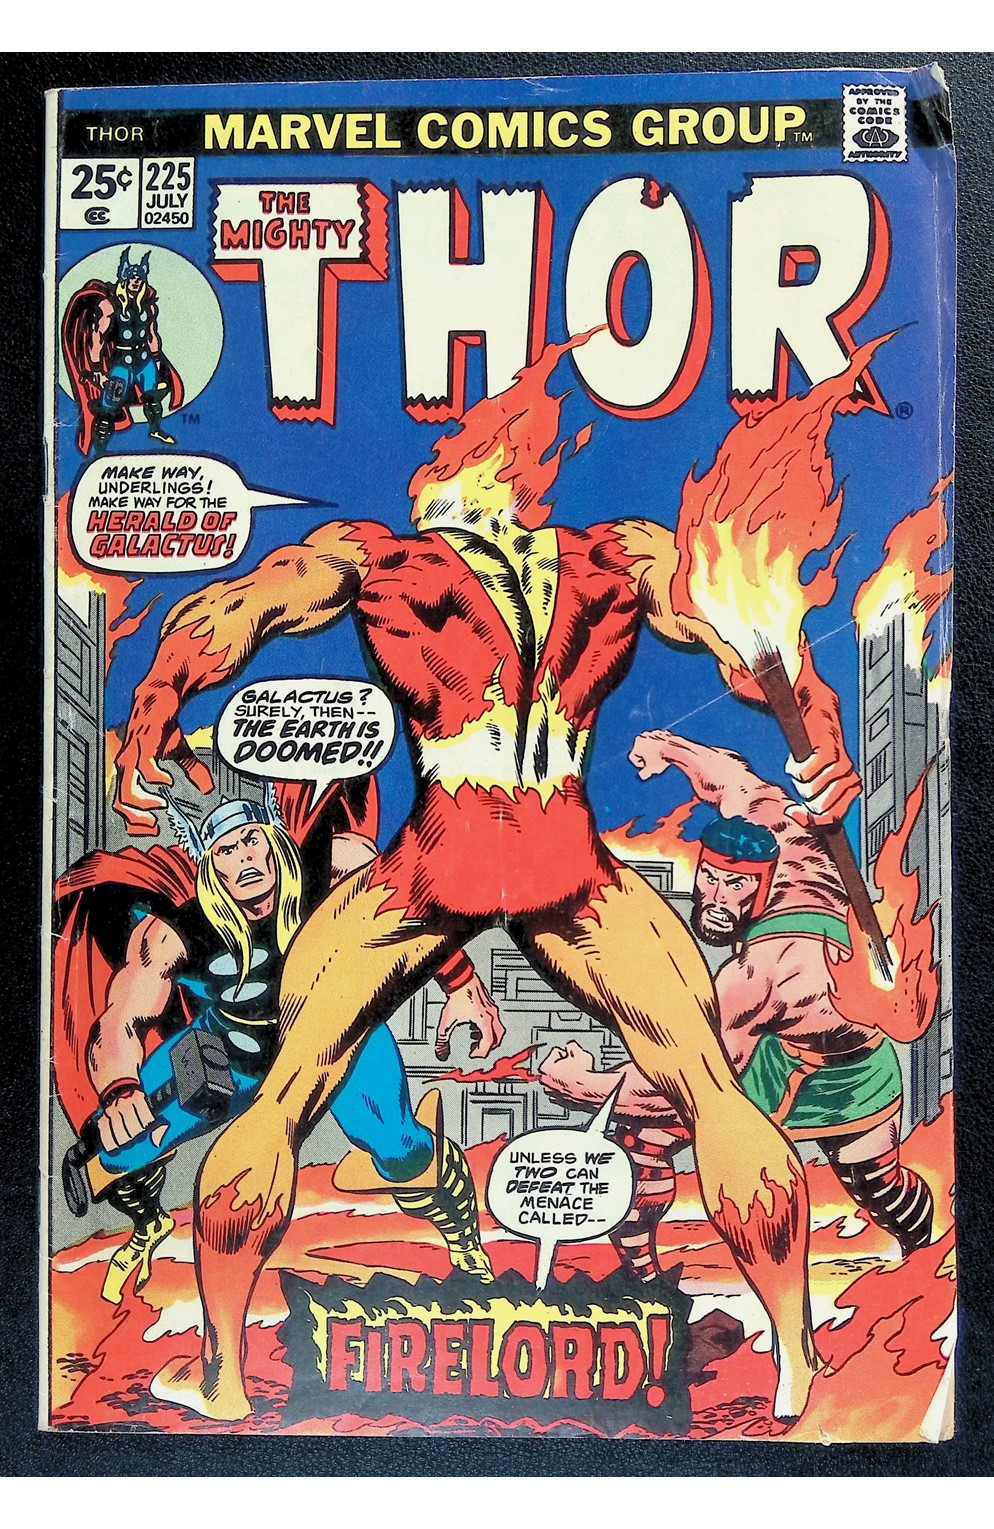 Thor #225 - 1974